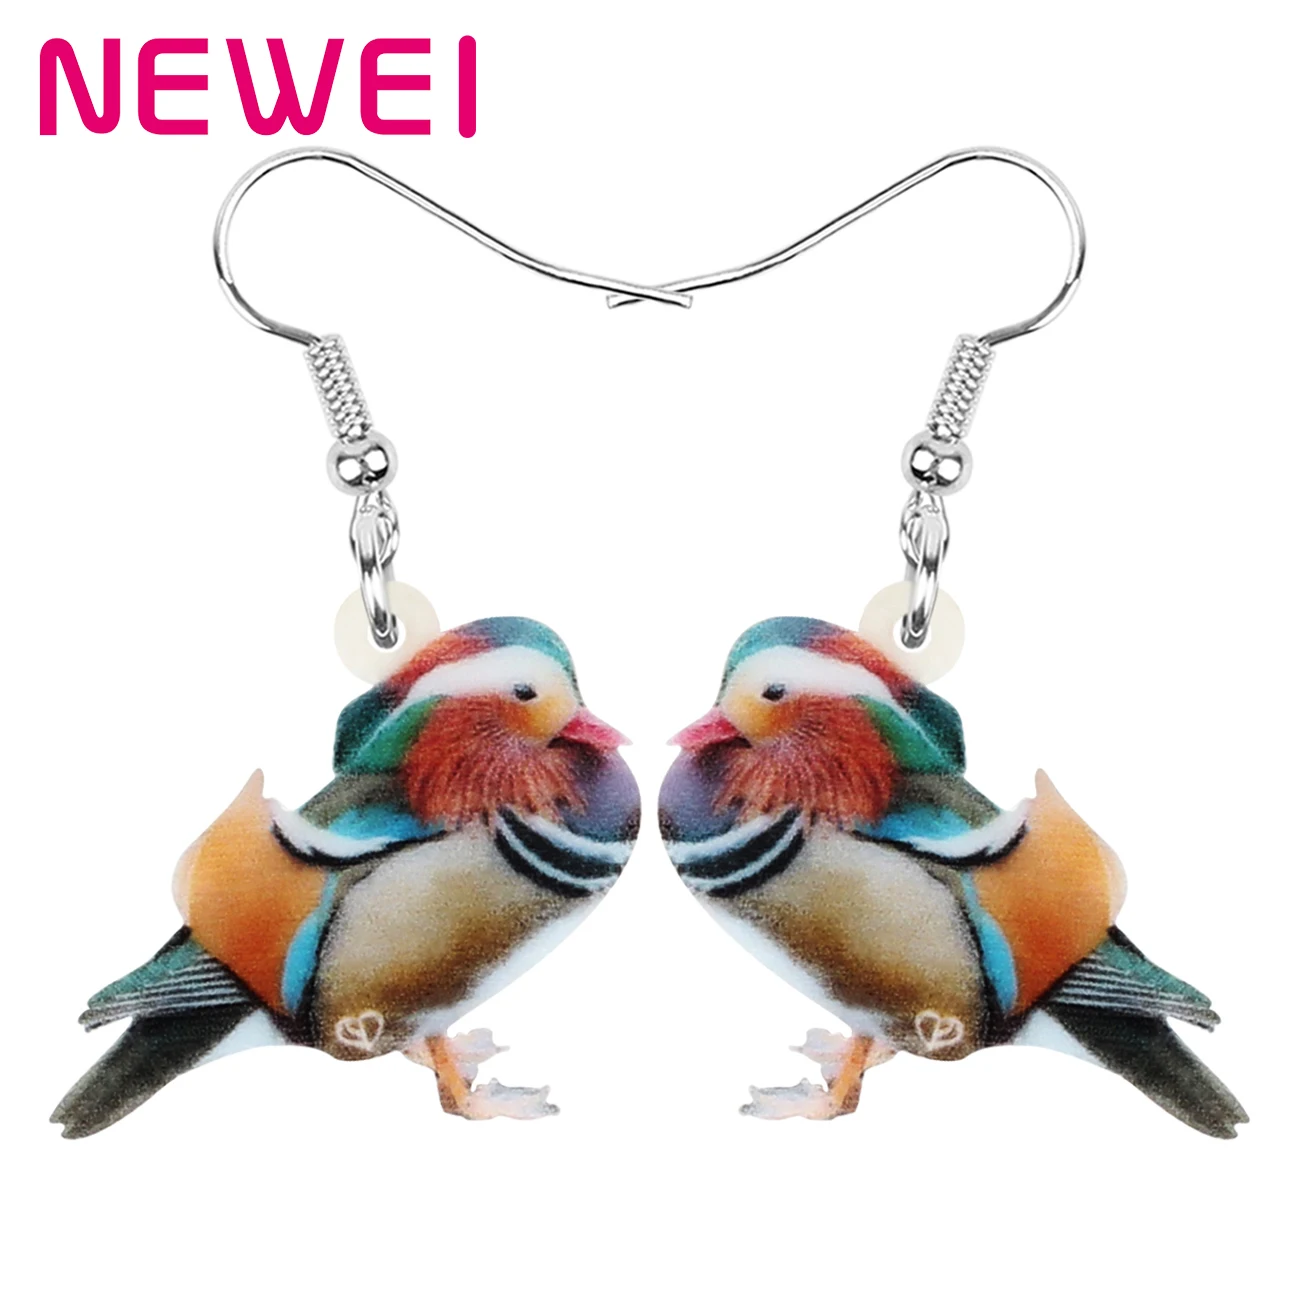 

Acrylic Colorful Mandarin Duck Earrings Bird Drop Dangle Fashion Animals Jewelry For Women Girls Kids Teens Novelty Charms Gifts, Multicolor